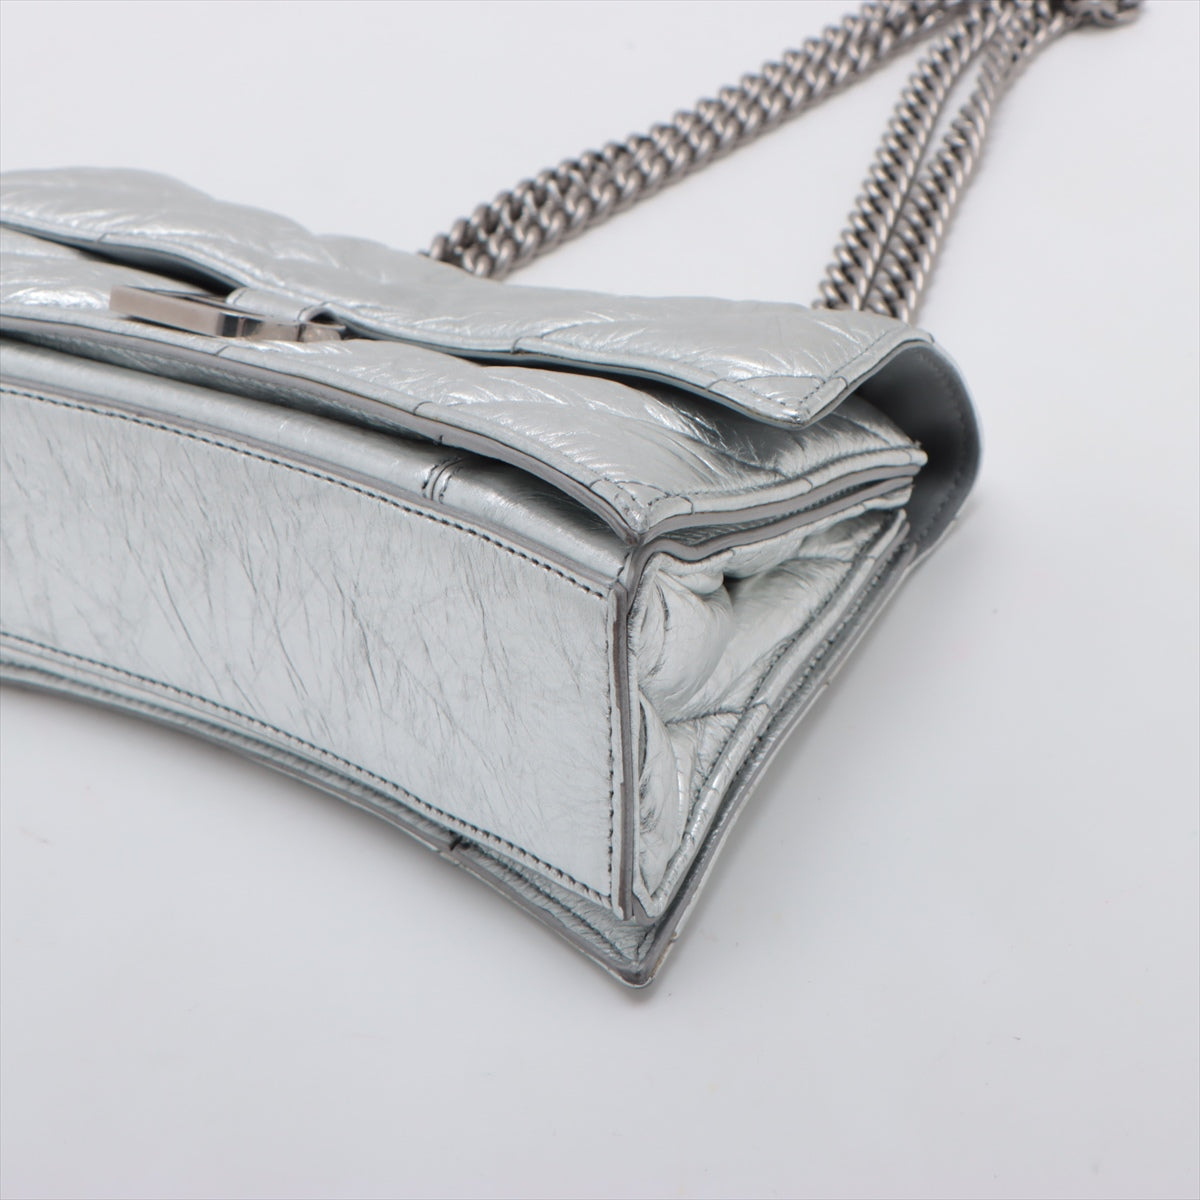 Balenciaga Hourglass Leather Chain Shoulder Bag Silver 716351